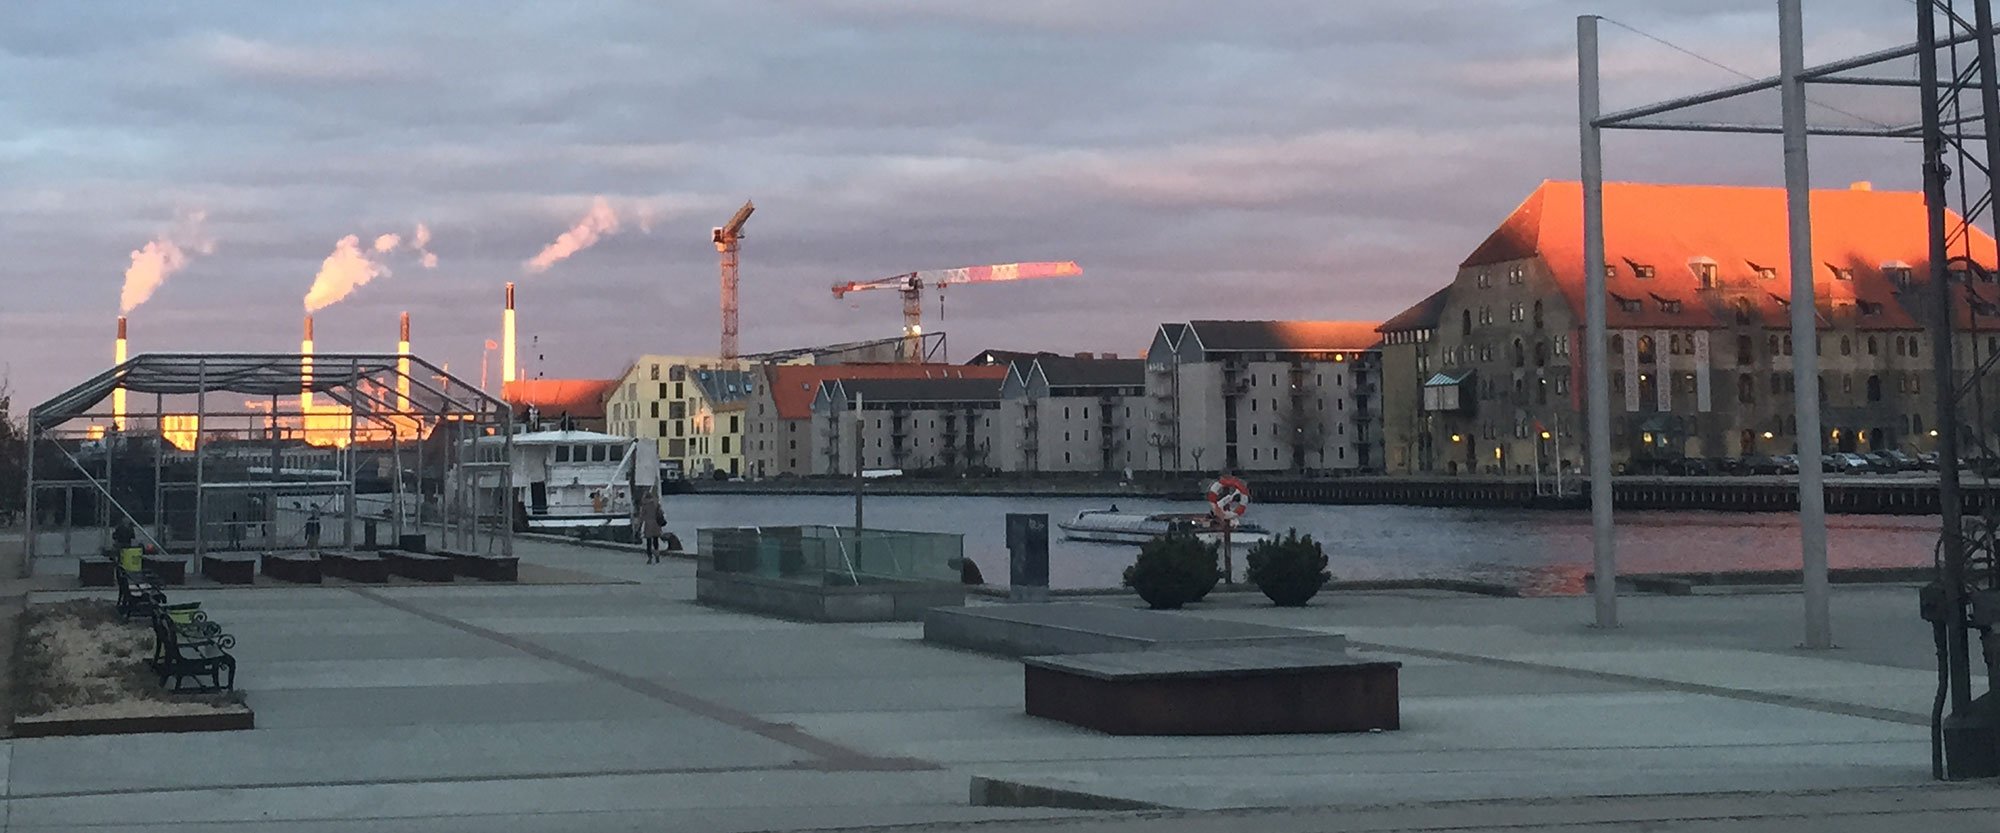 Copenhagen district heating plat on the horizon